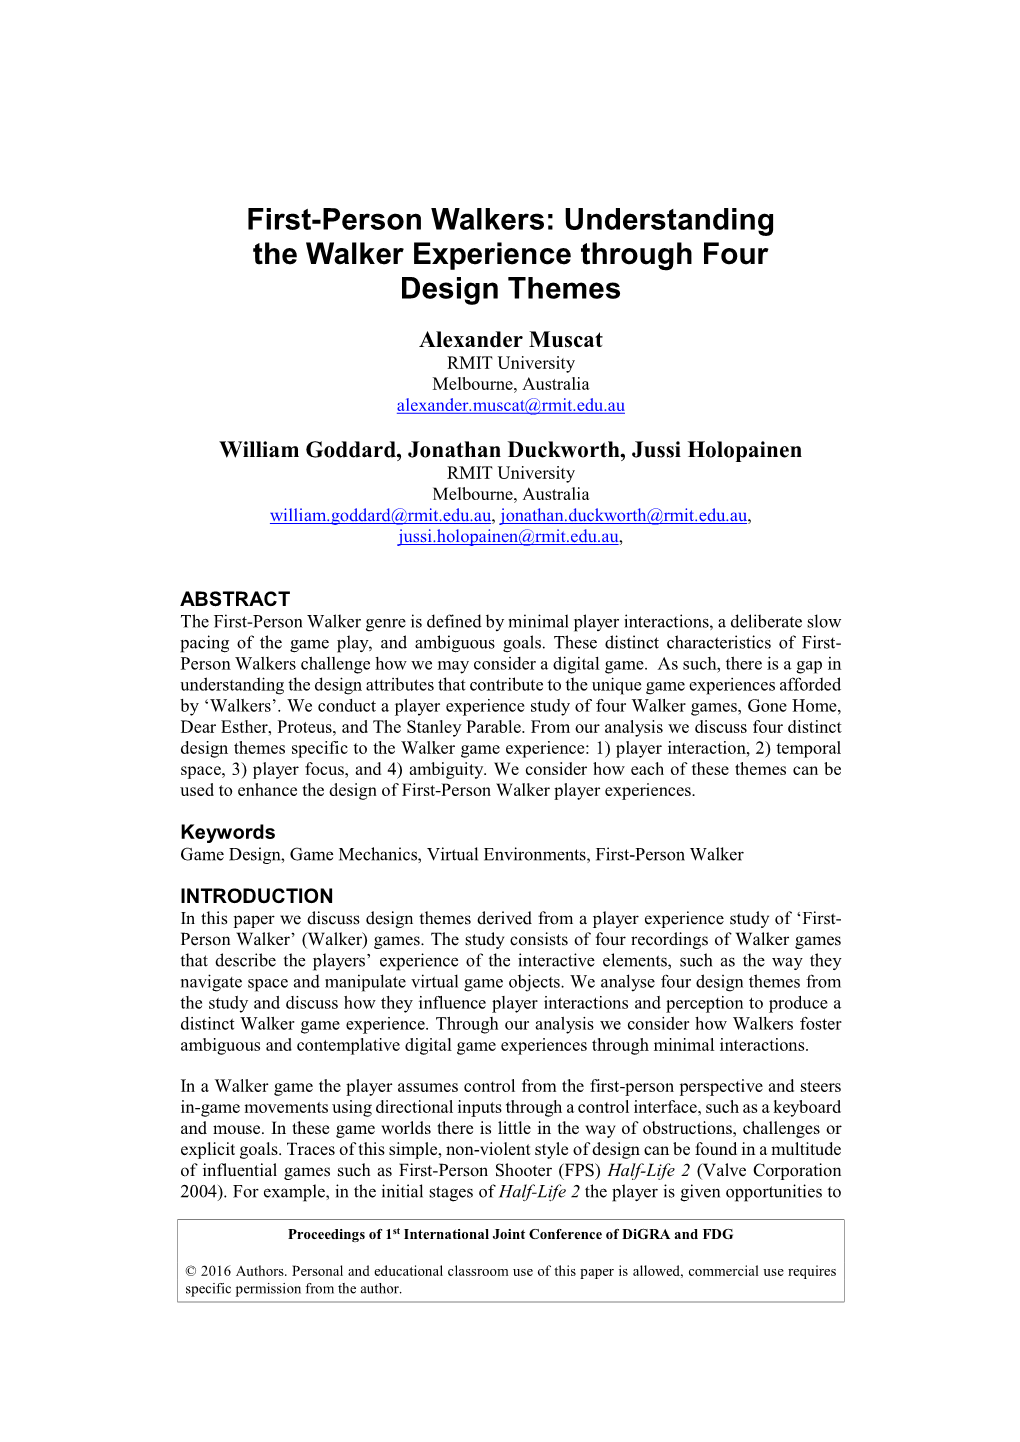 Understanding the Walker Experience Through Four Design Themes Alexander Muscat RMIT University Melbourne, Australia Alexander.Muscat@Rmit.Edu.Au